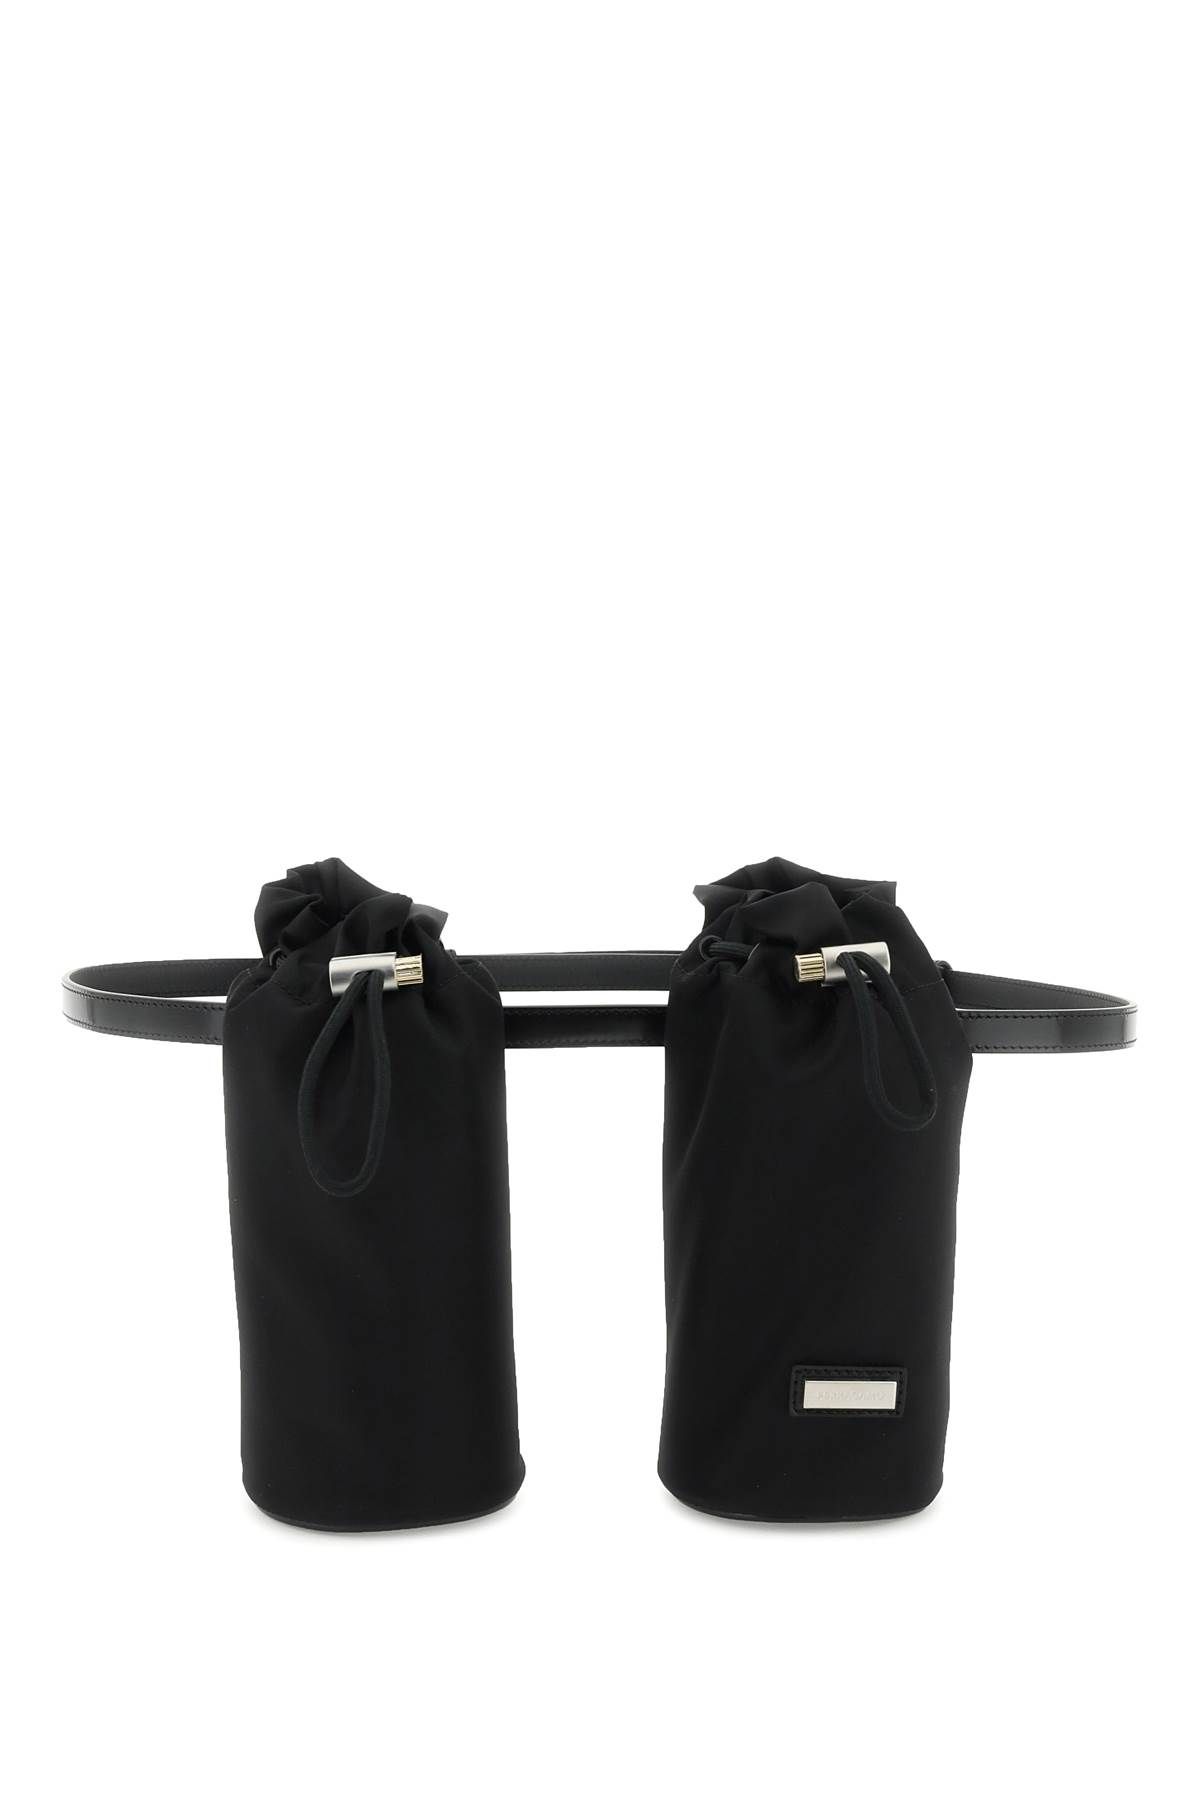 Ferragamo Double Belt Bag In Black